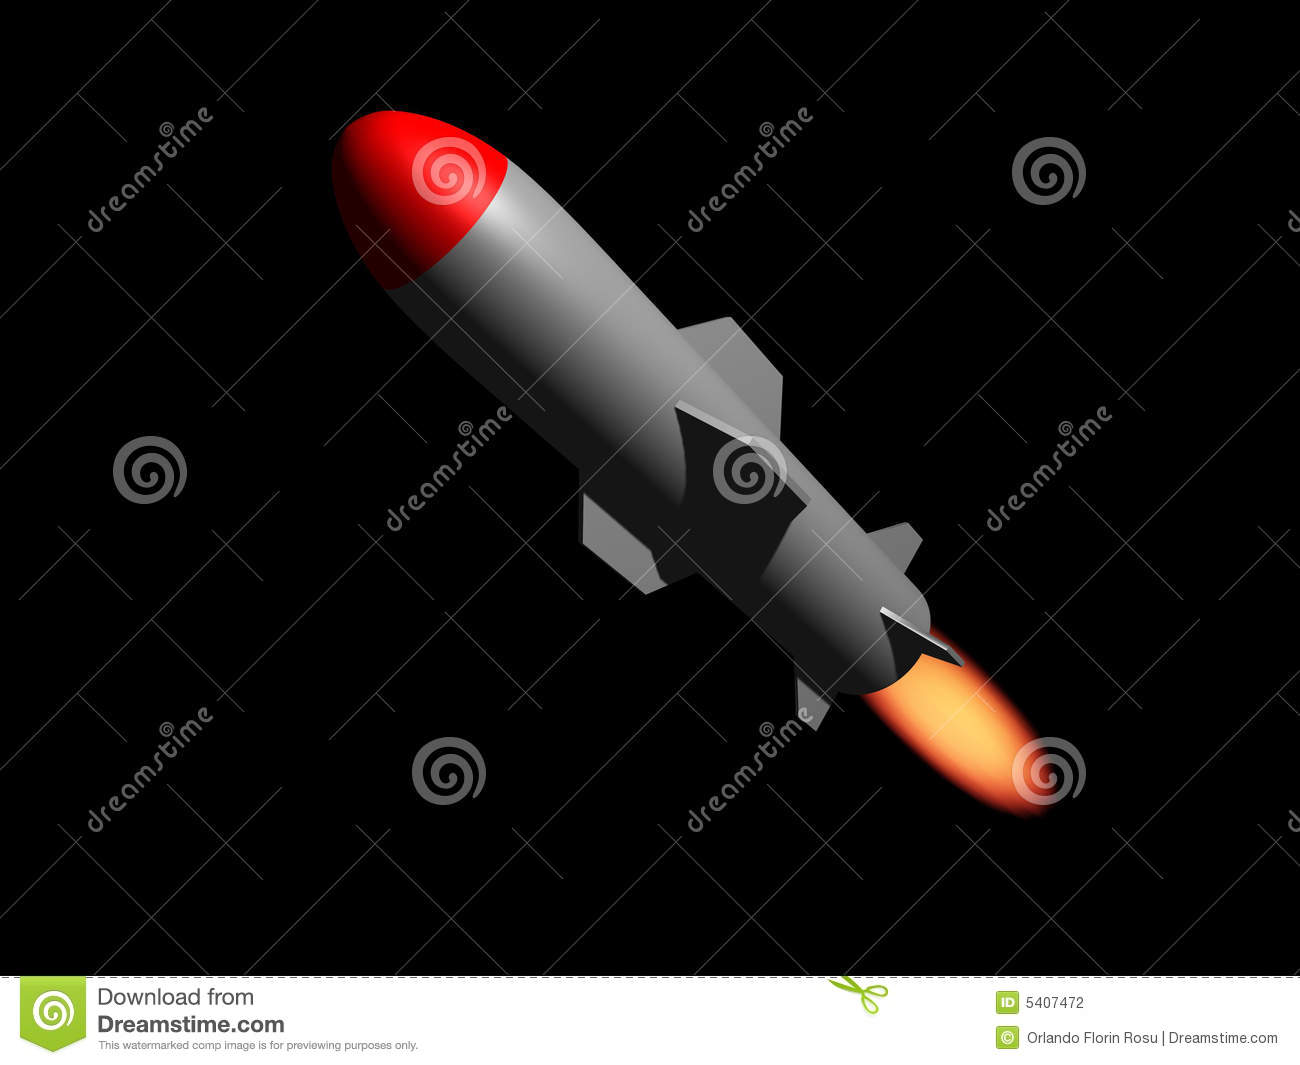 Cruise Missile   Rocket   On Black Background   Rendered In 3d